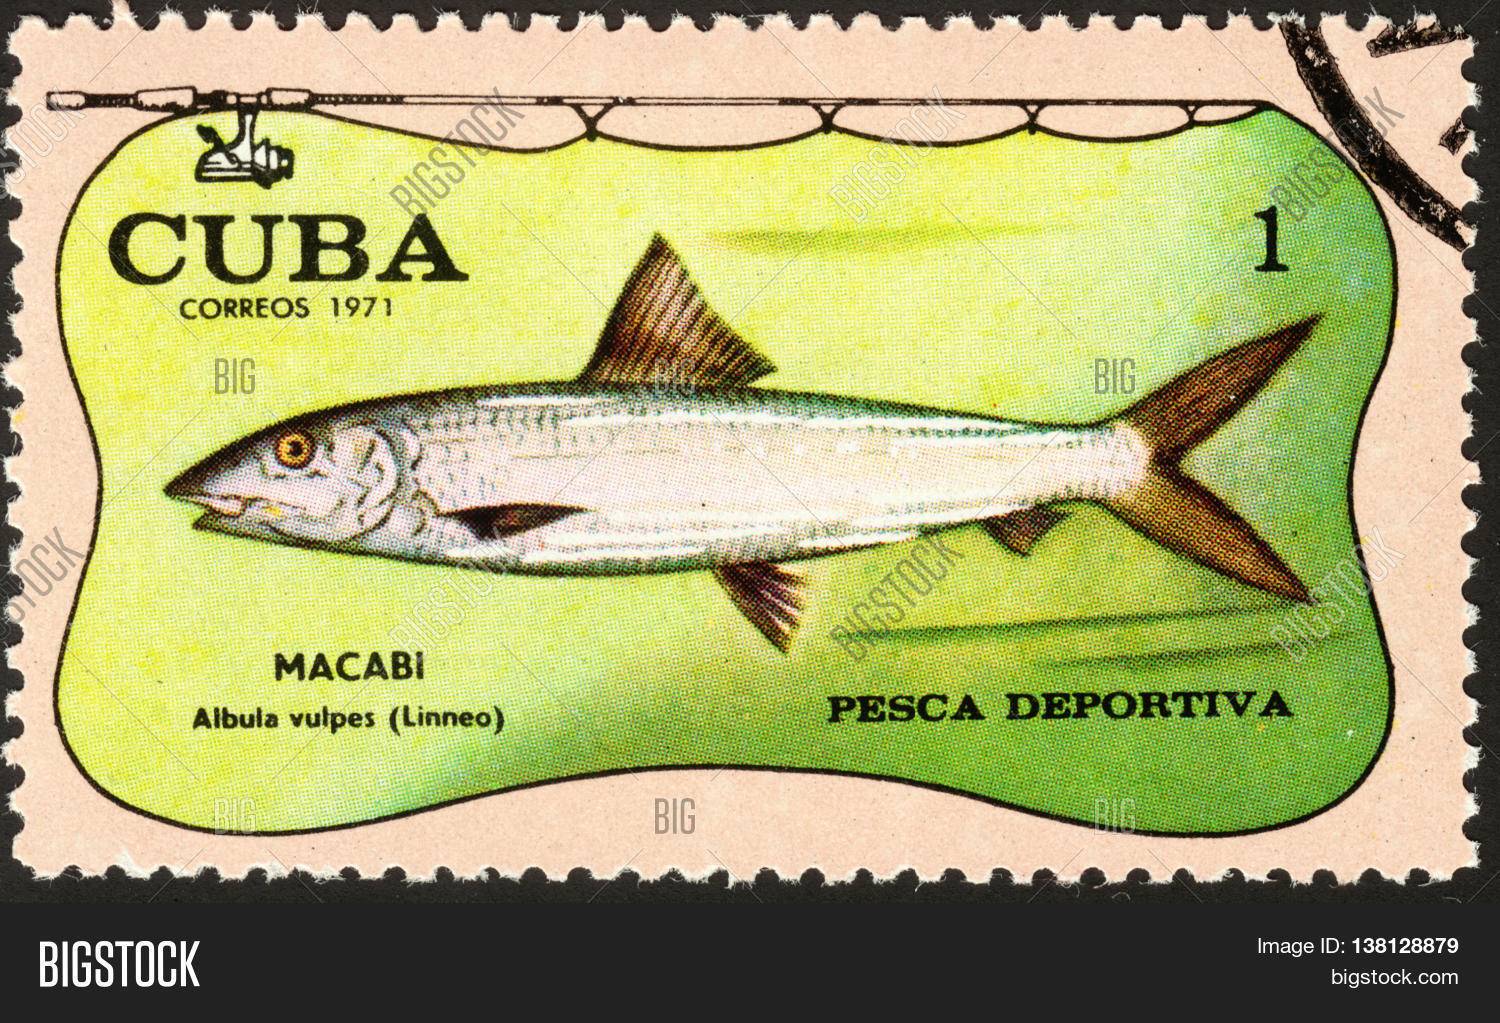 Рыба «тюлька абрауская» фото и описание